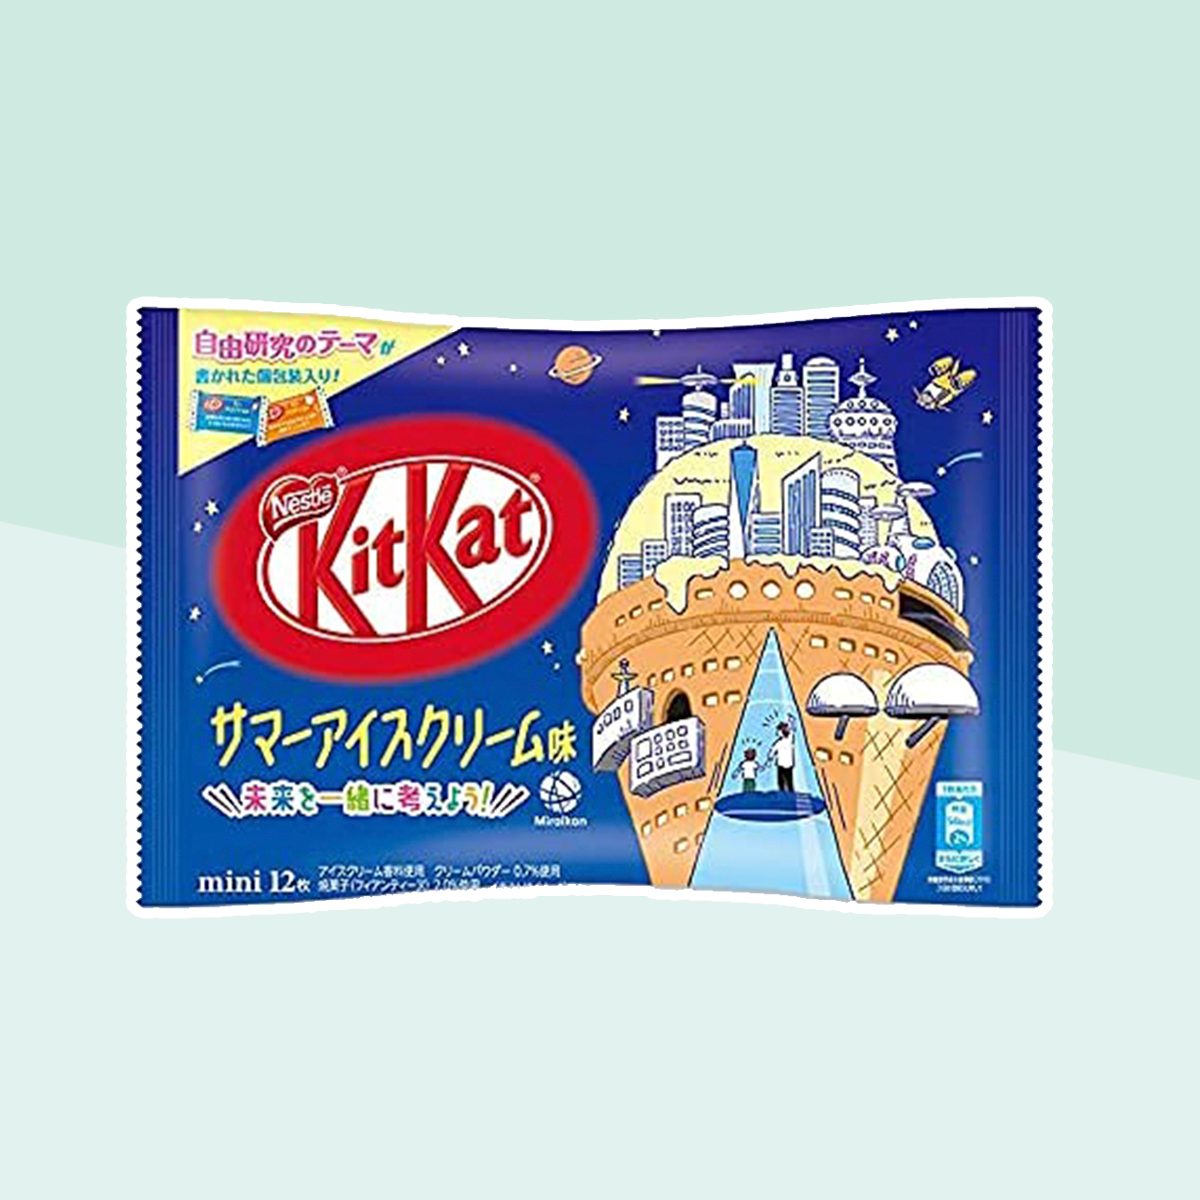 Exotic Kit Kats Summer Mango Flavor (Japan)